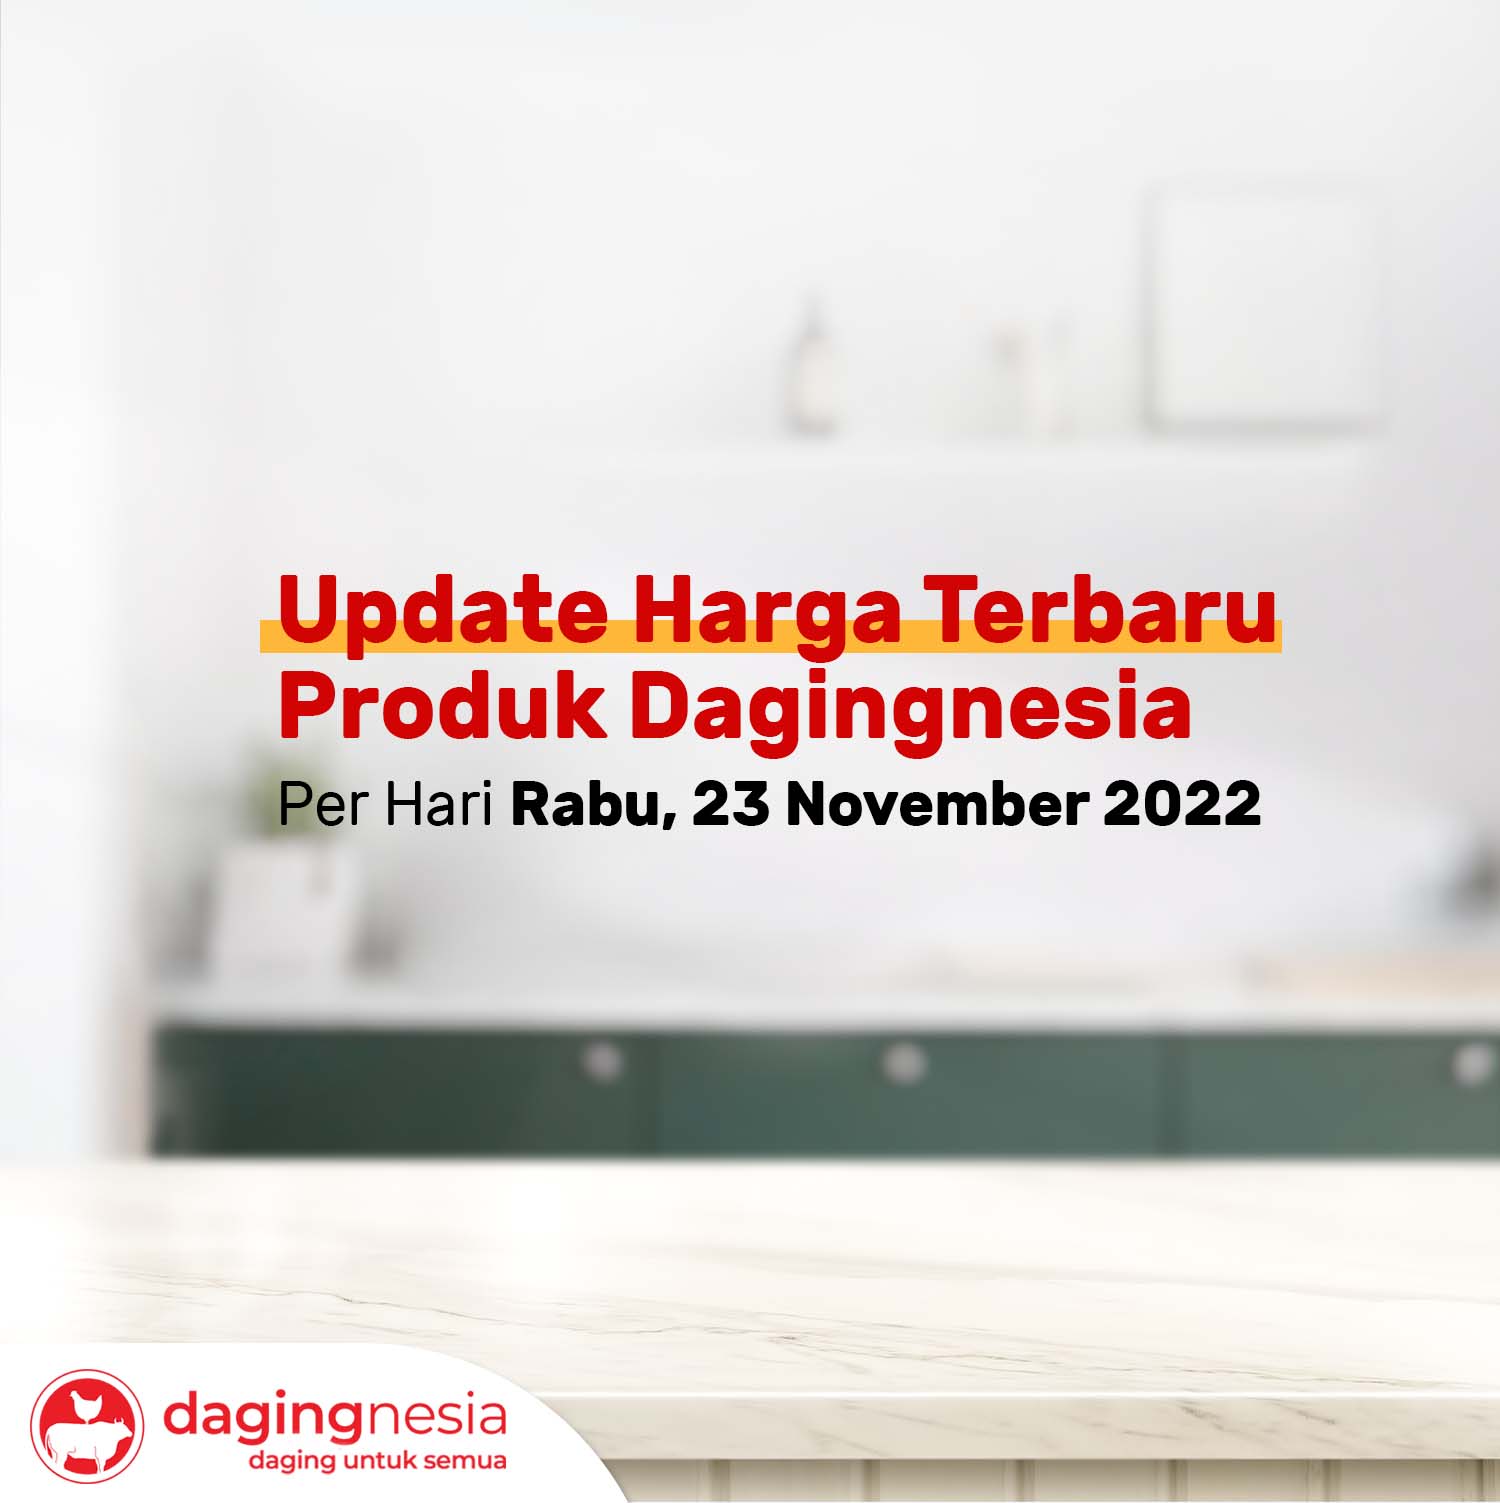 Update Pricelist Dagingnesia – 23 November 2022